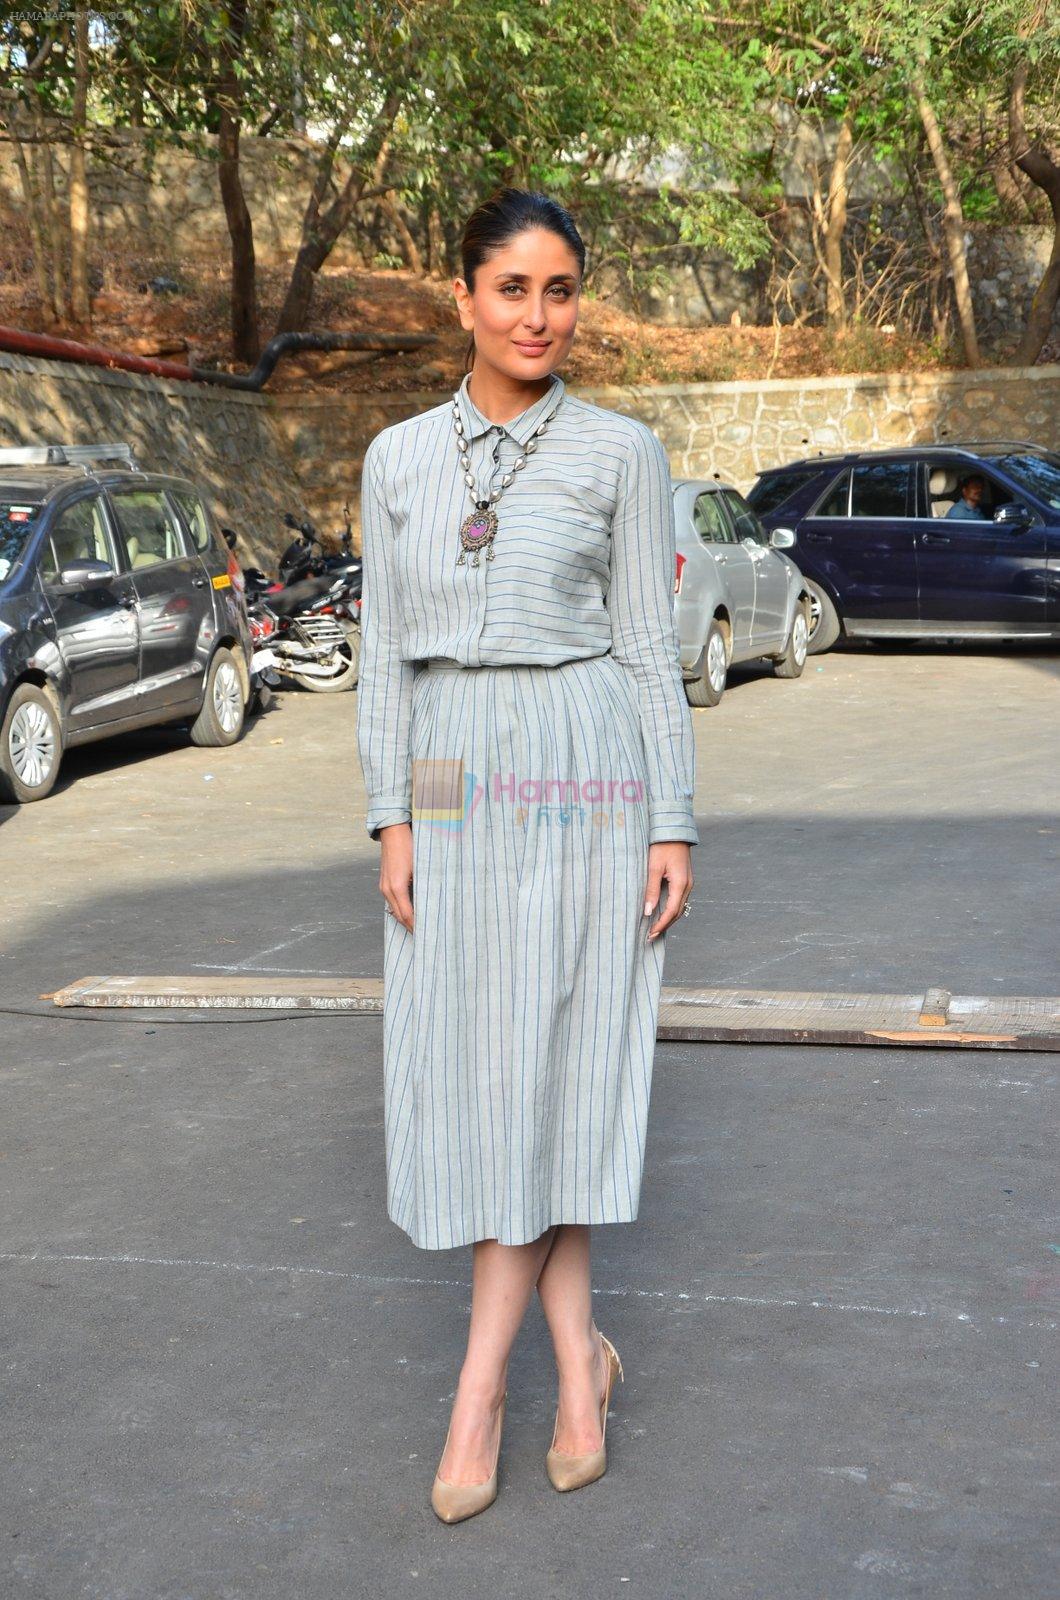 Kareena Kapoor exclusive photo shoot on 20th March 2016